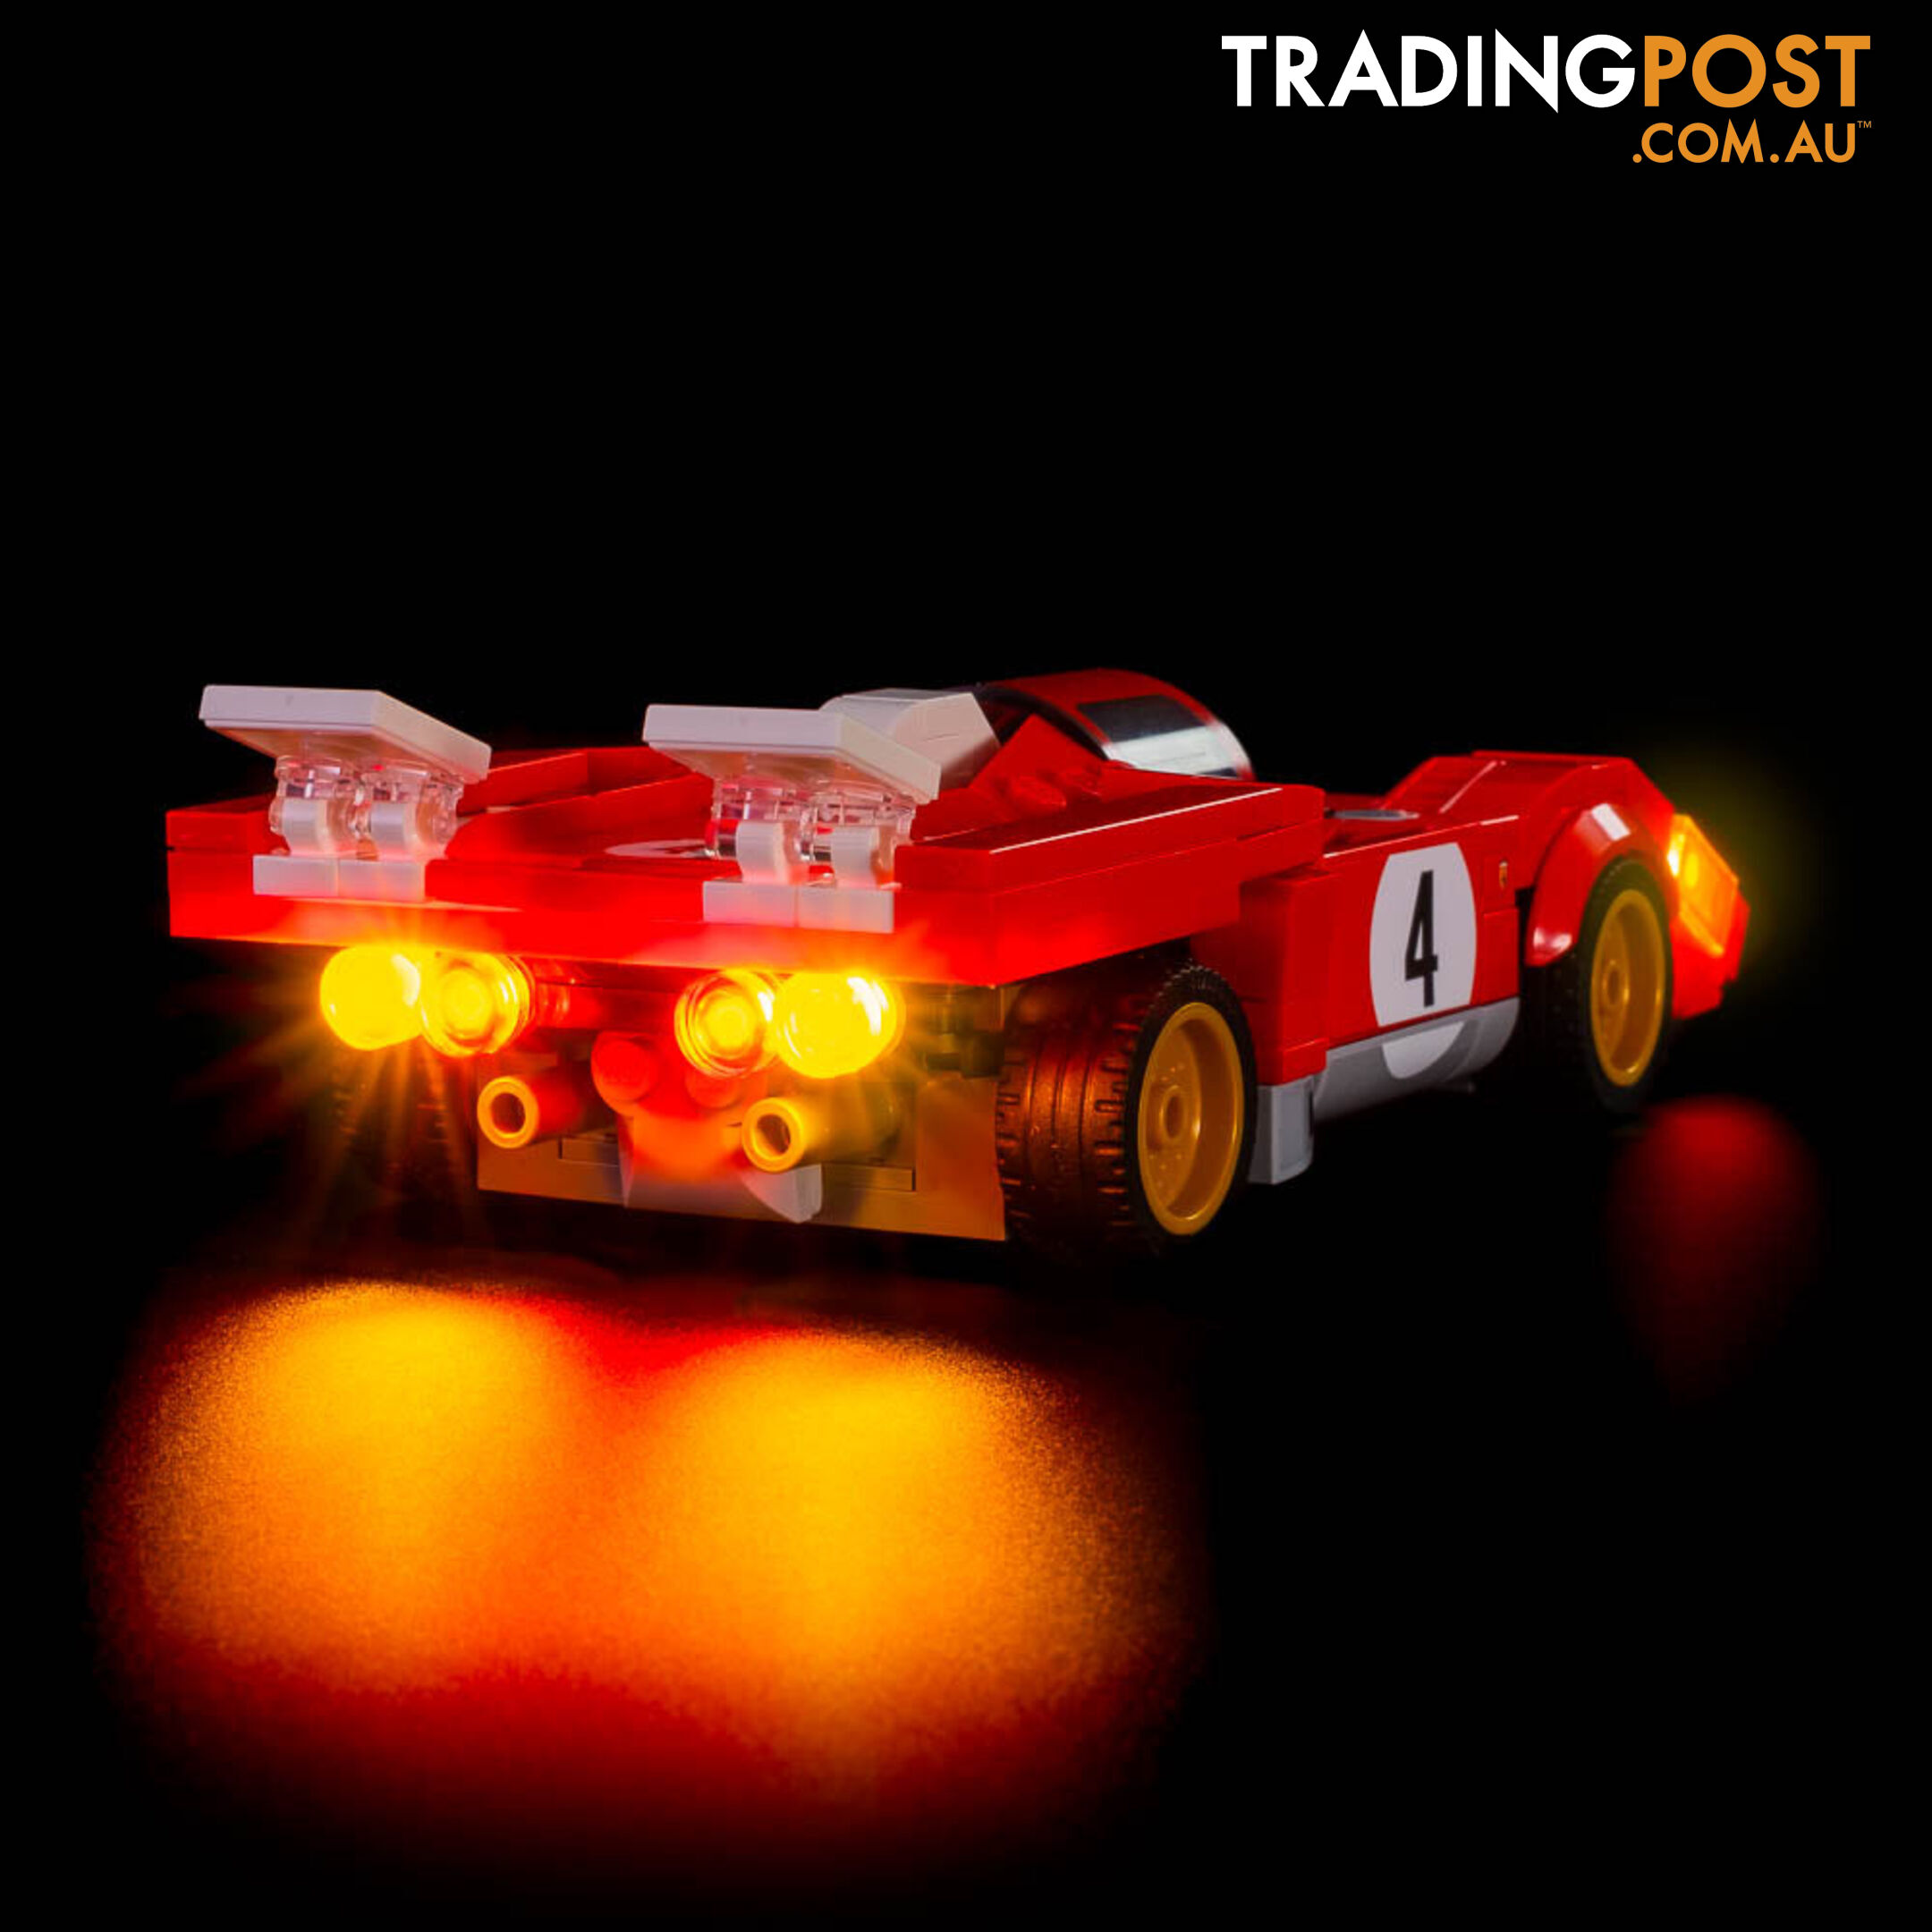 Light Kit For LEGO Speed Champions 1970 Ferrari 512 M 76906 - Light My Bricks - Lb75452389382 - 754523893822